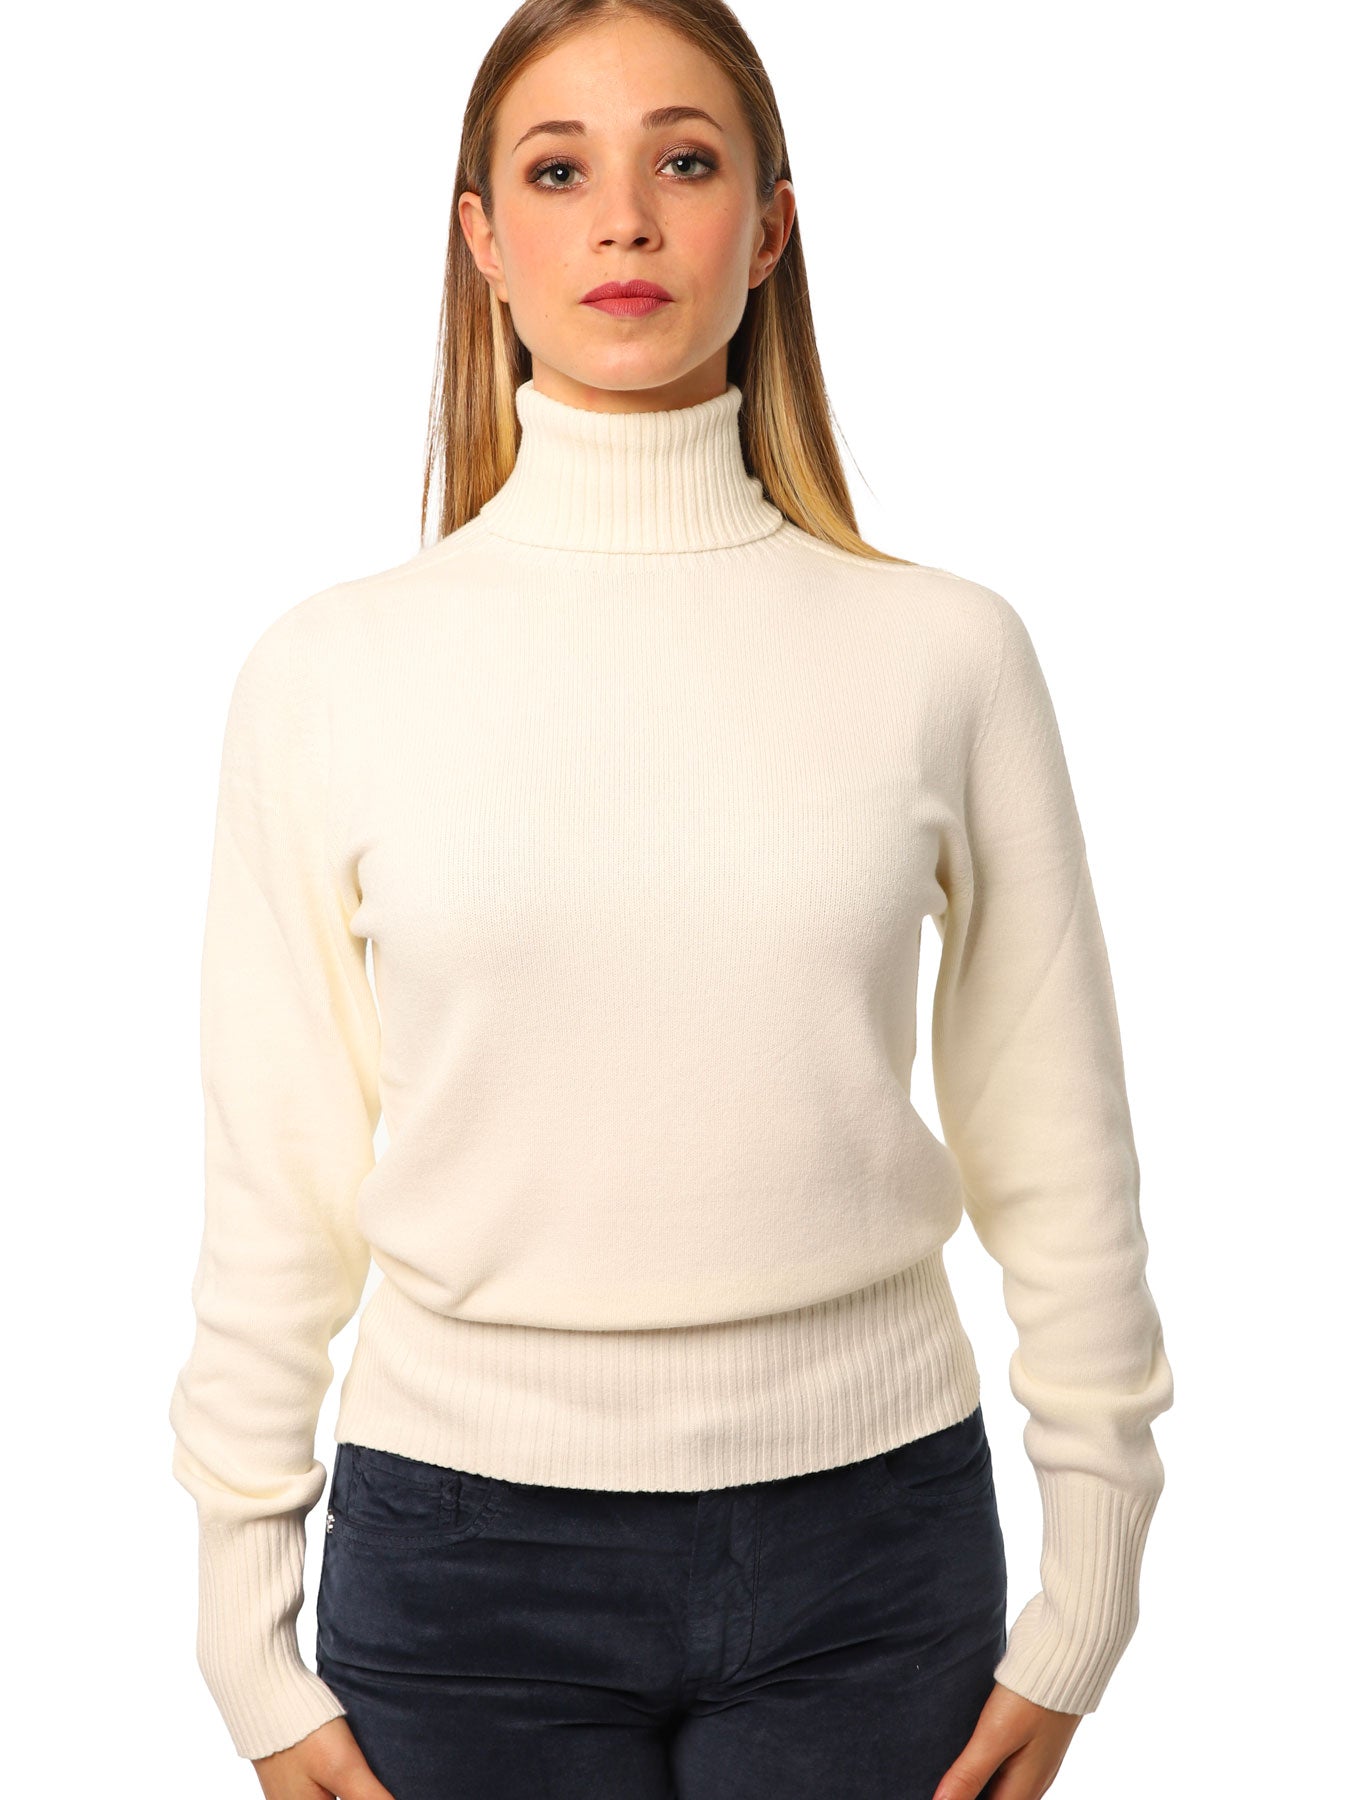 Women's sweater in viscose blend